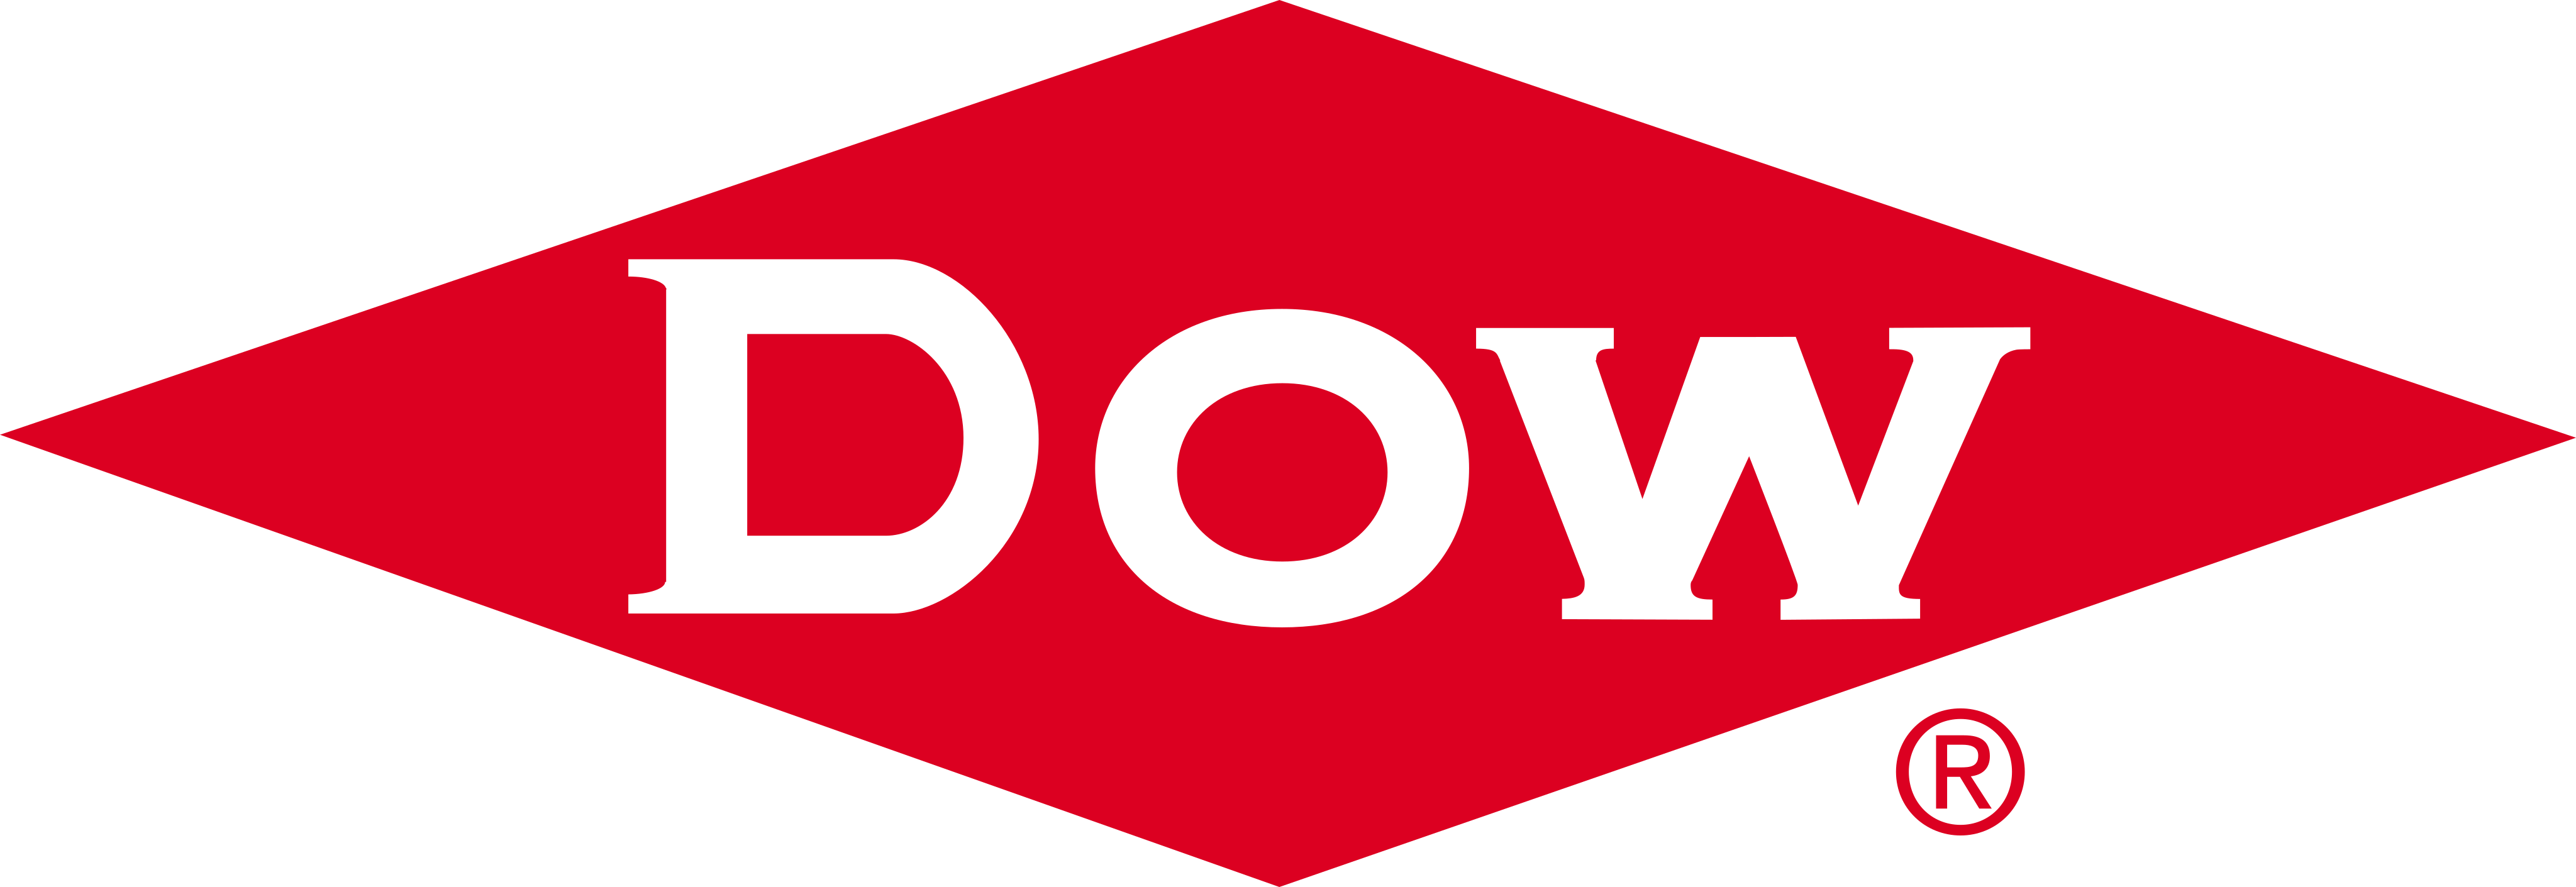 Dow Chemical logo.